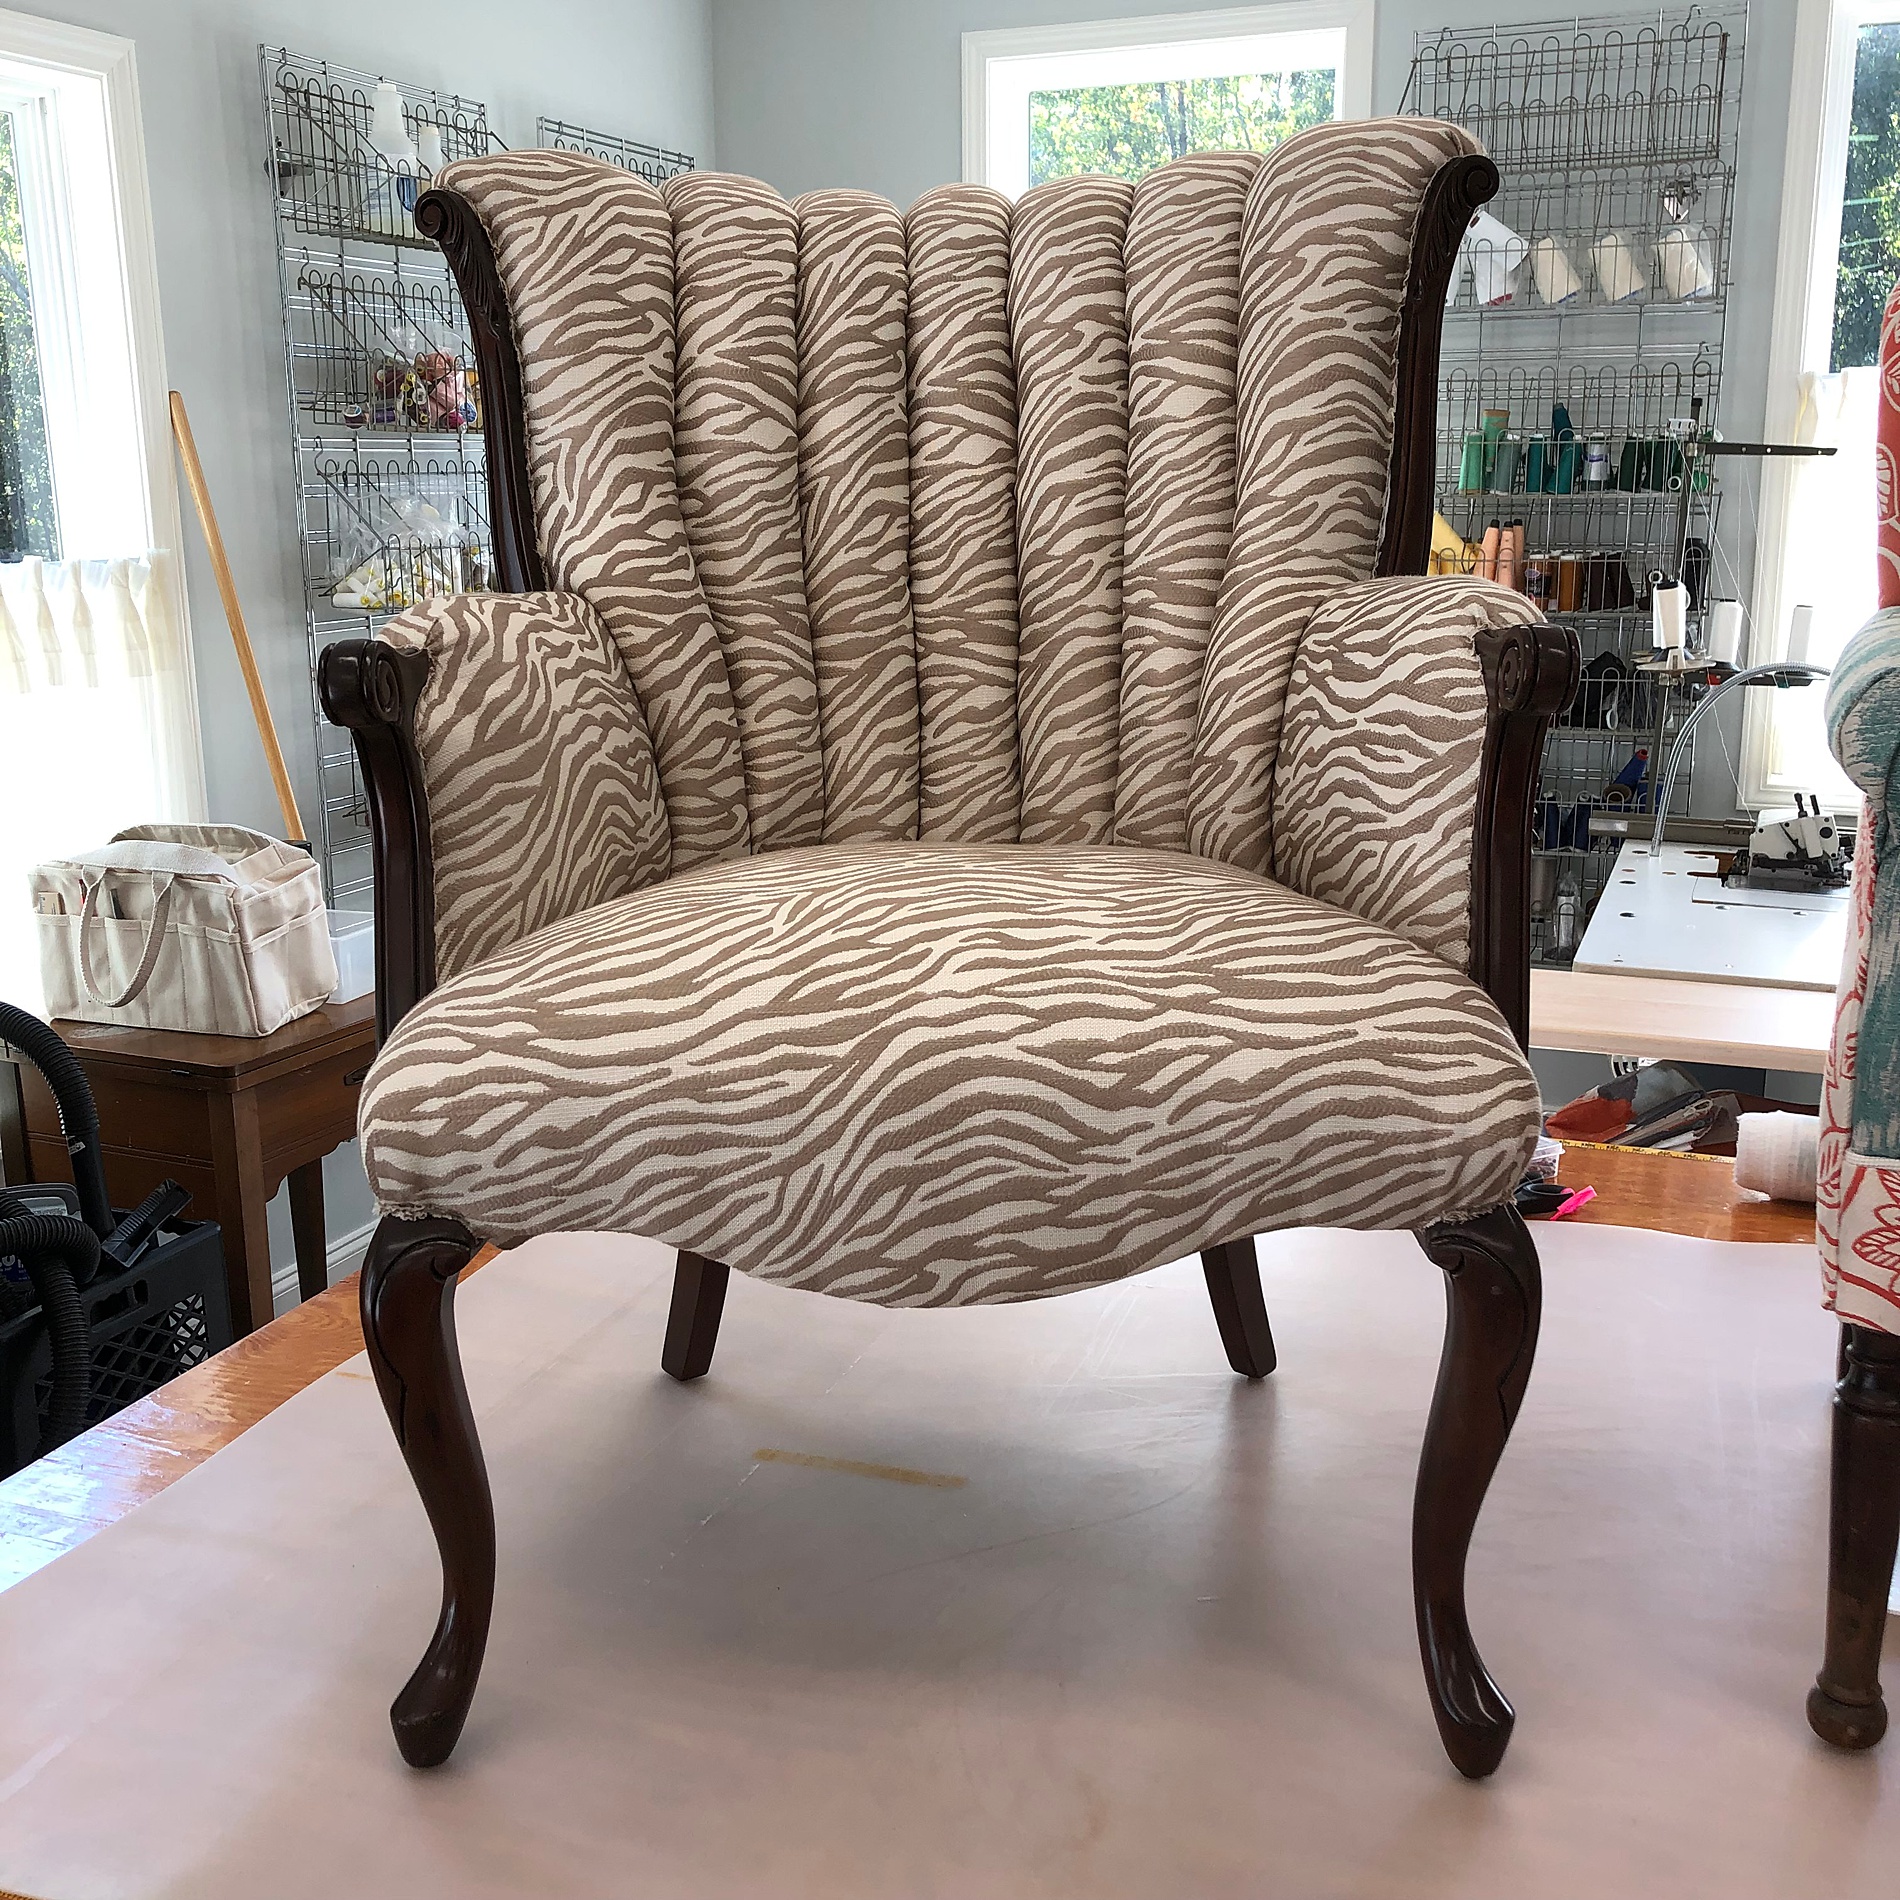 fun zebra patterned chair